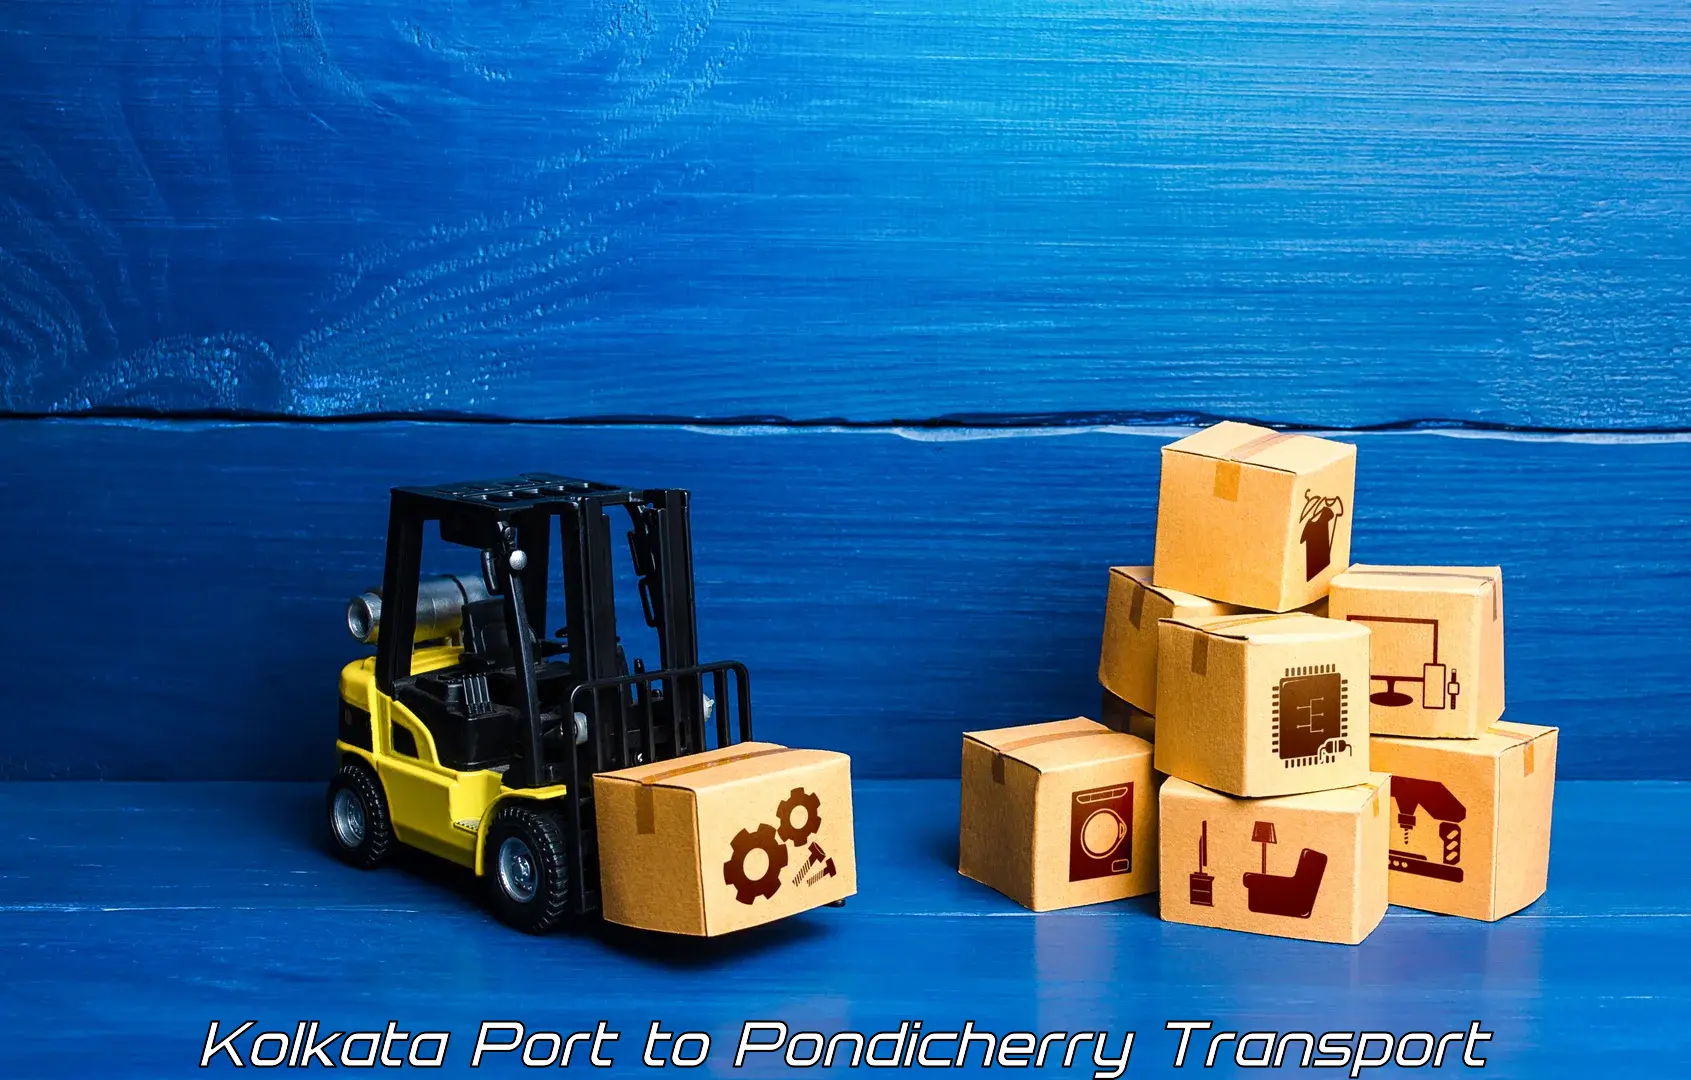 Commercial transport service Kolkata Port to Pondicherry